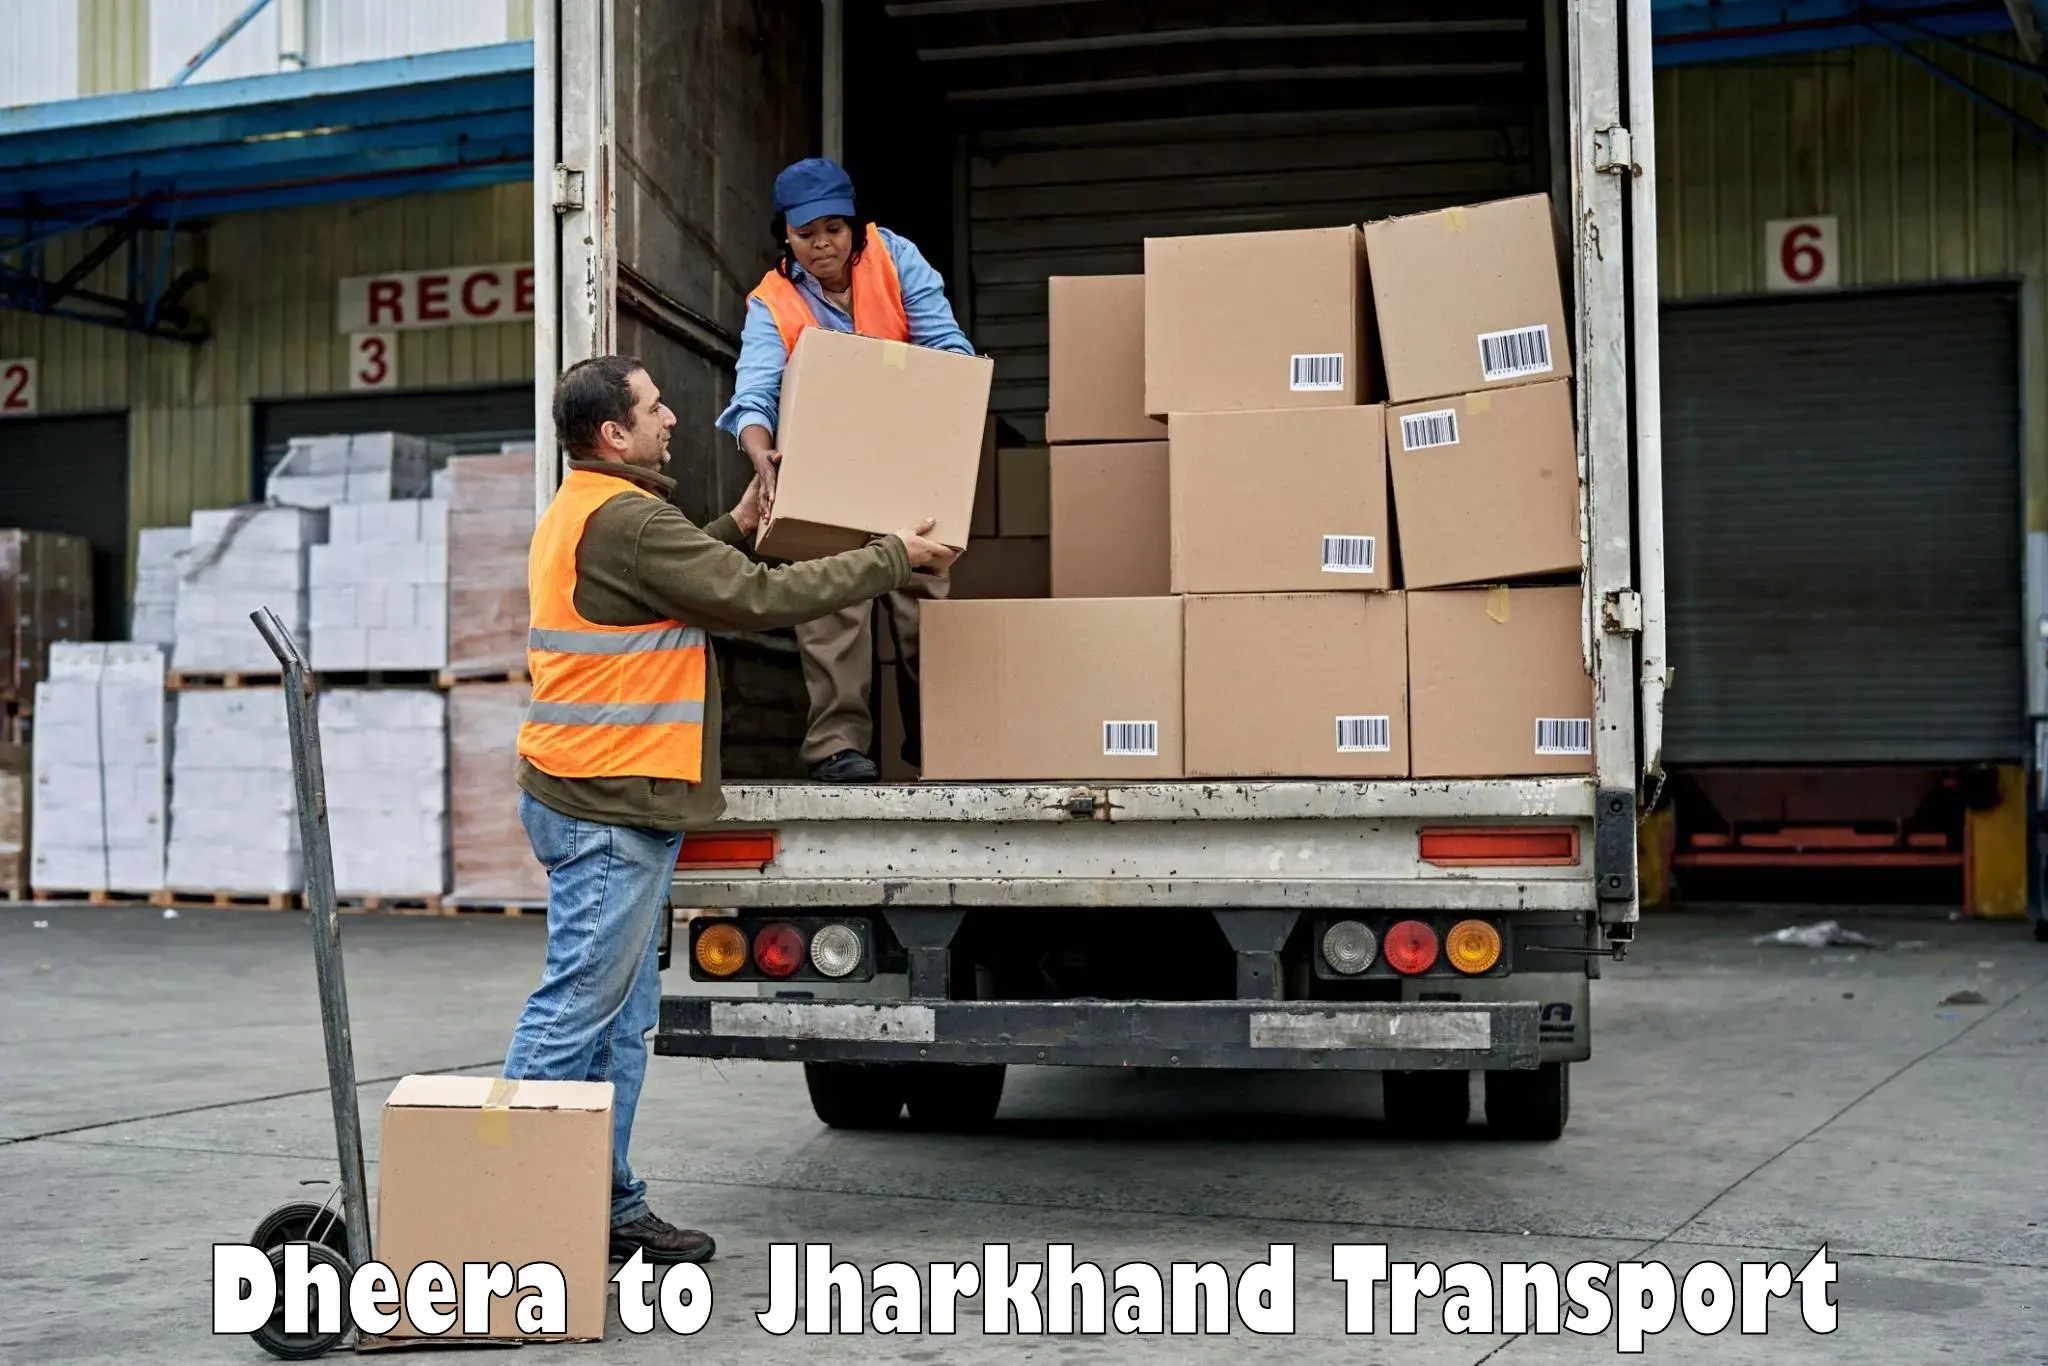 Truck transport companies in India Dheera to Kedla